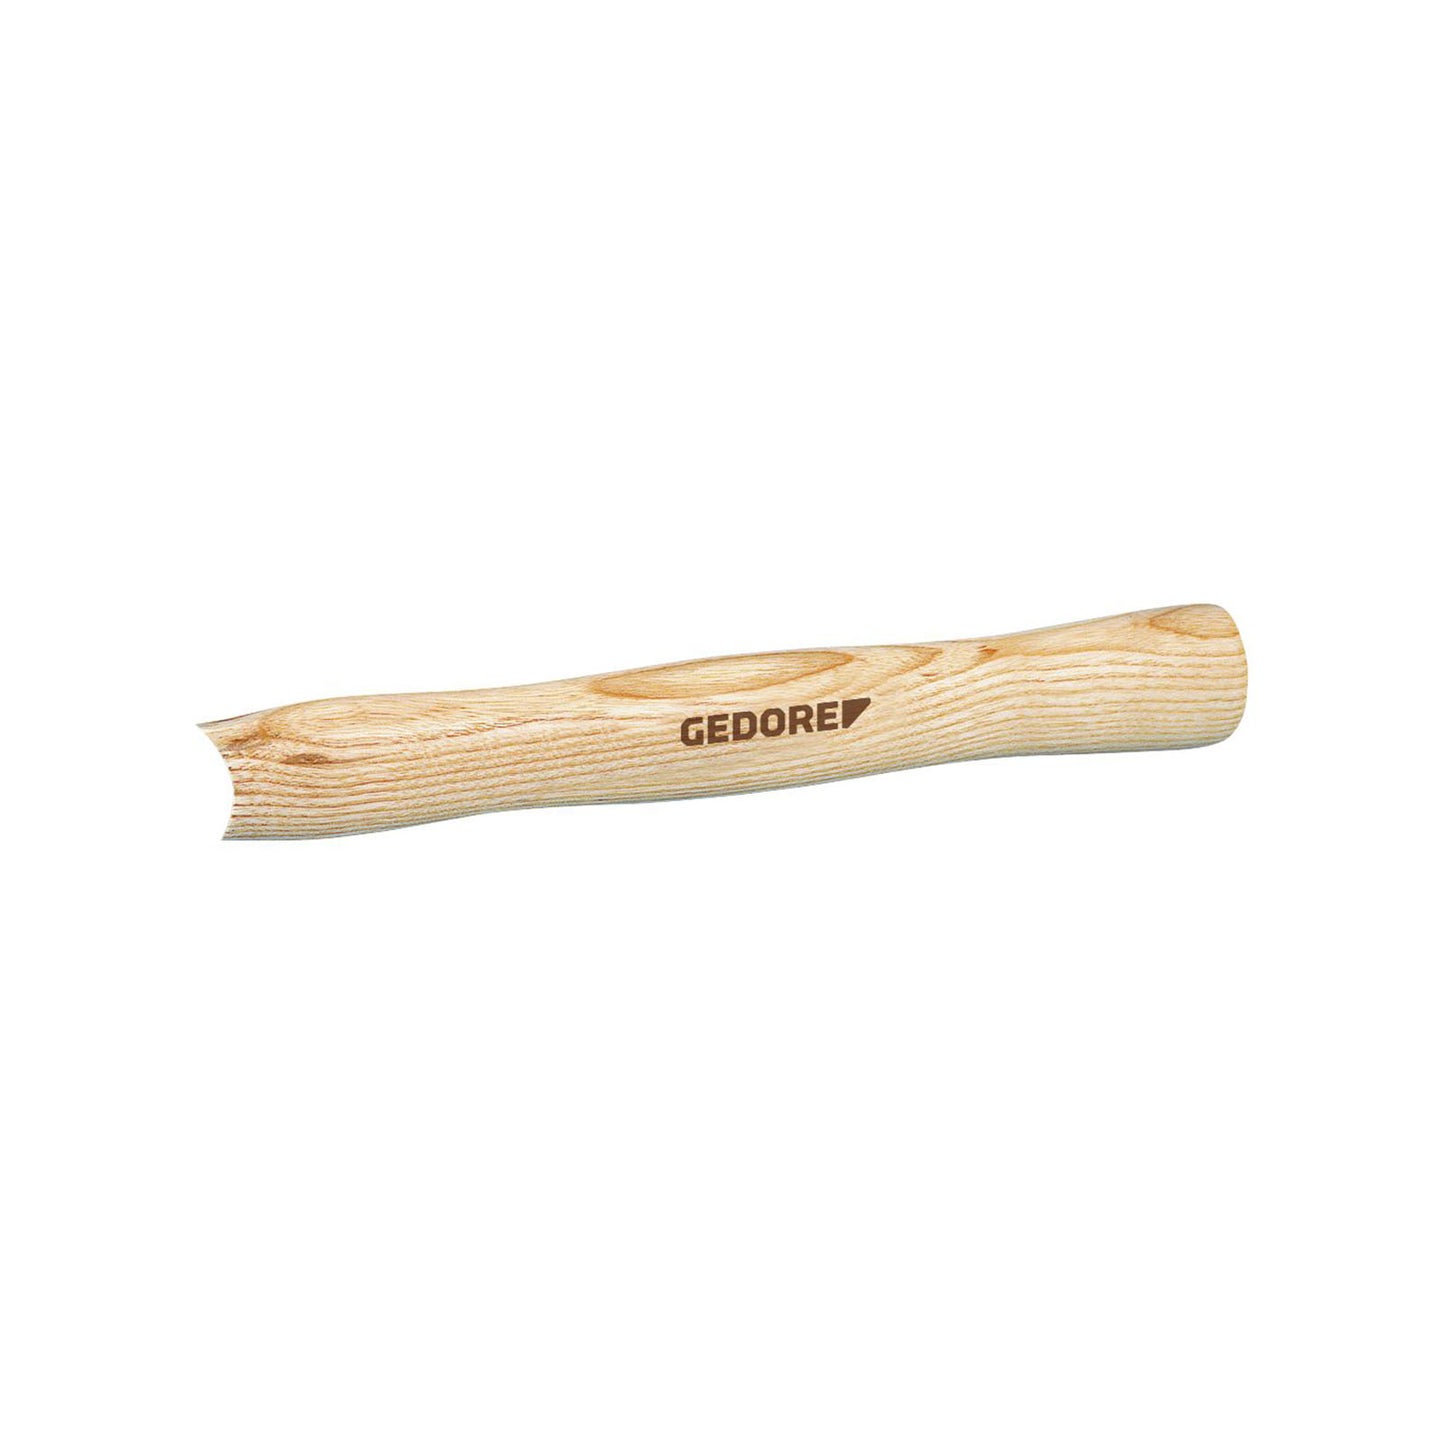 GEDORE E 224 E-60 - Ash replacement handle 38cm (8824370)